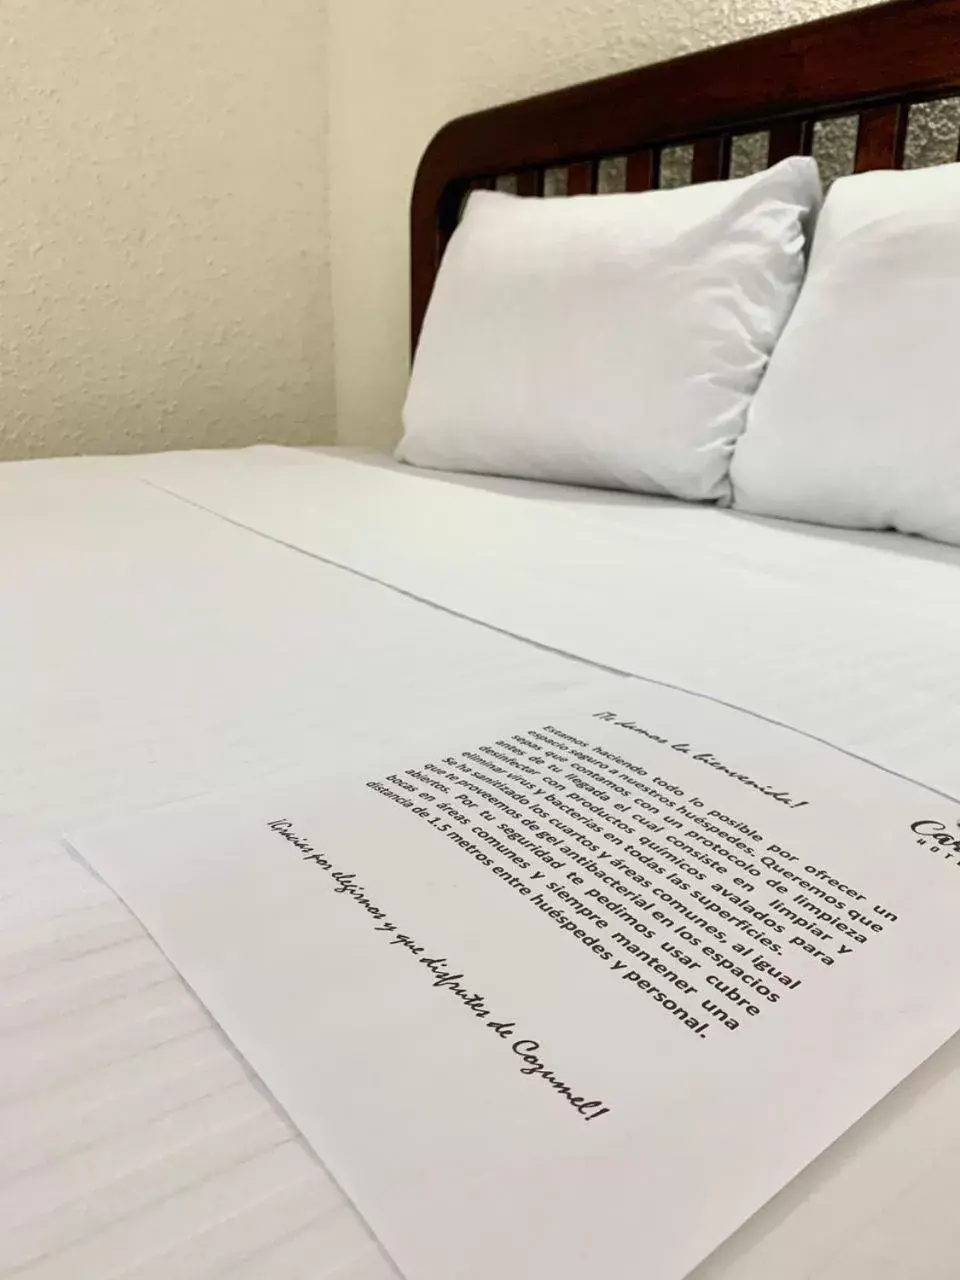 Bed in Hotel Caribe